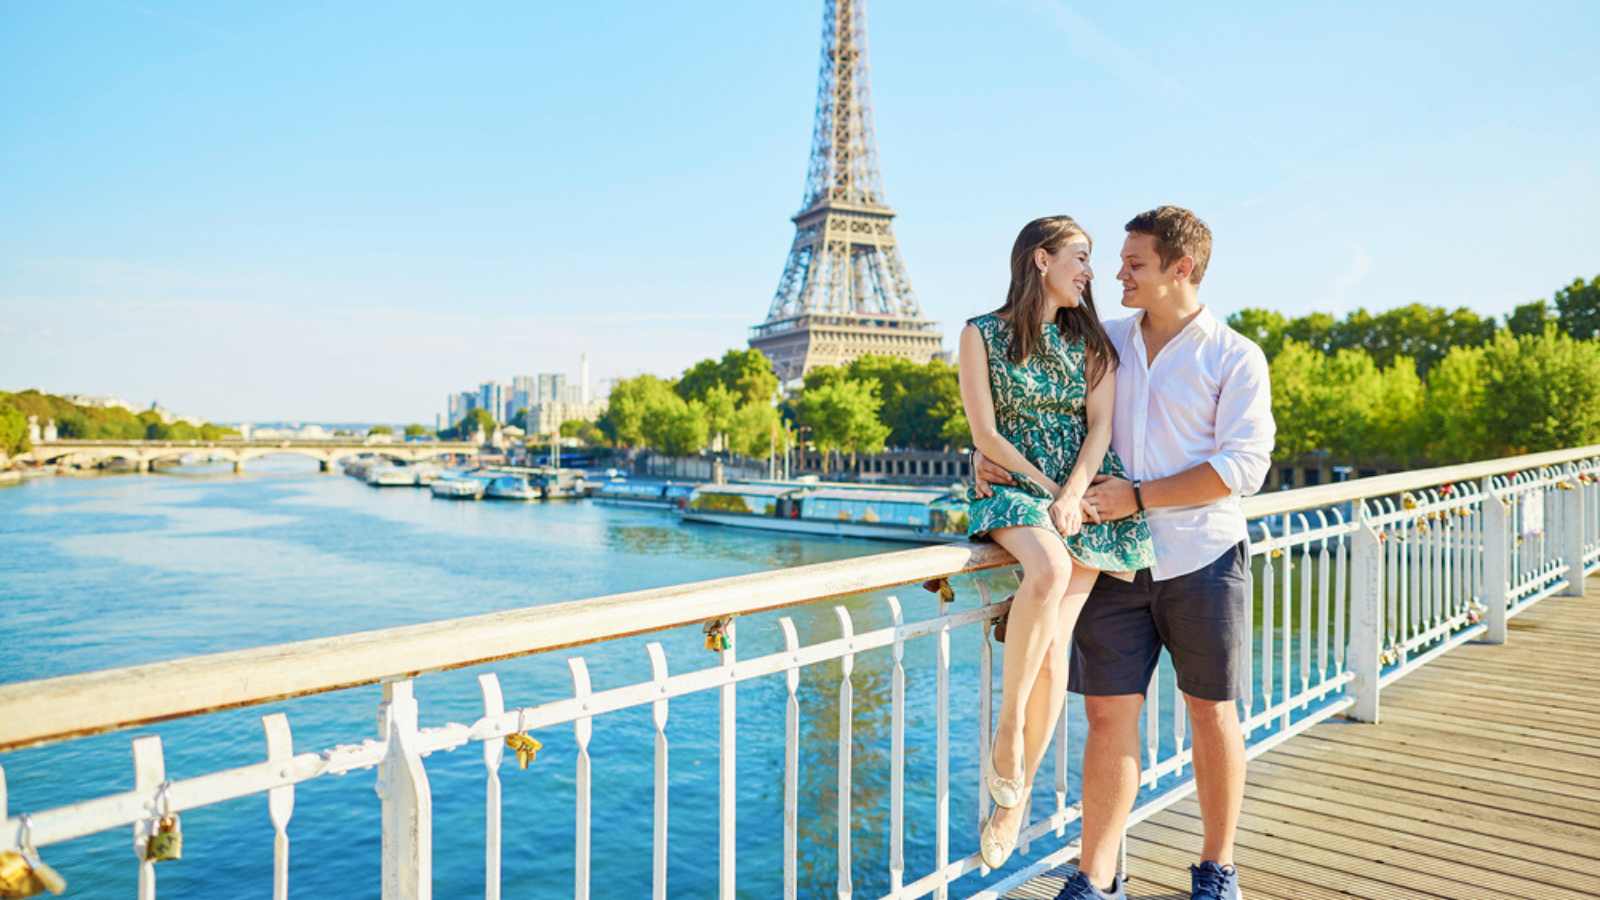 Couples dating in Paris